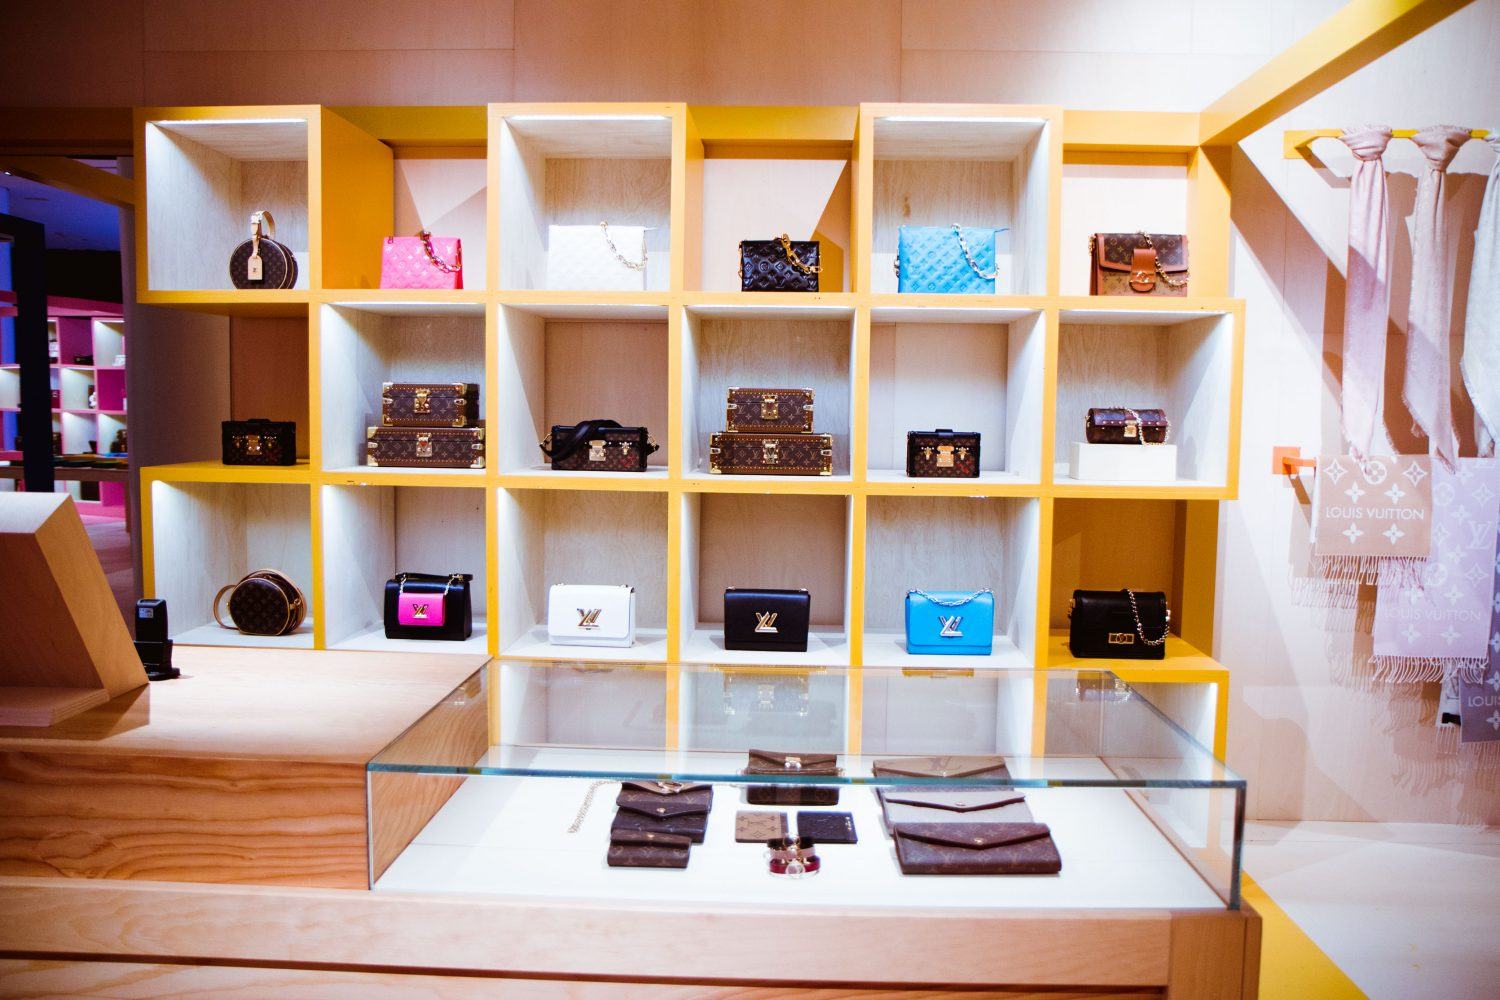 In New York, “Louis Vuitton: 200 Trunks, 200 Visionaries